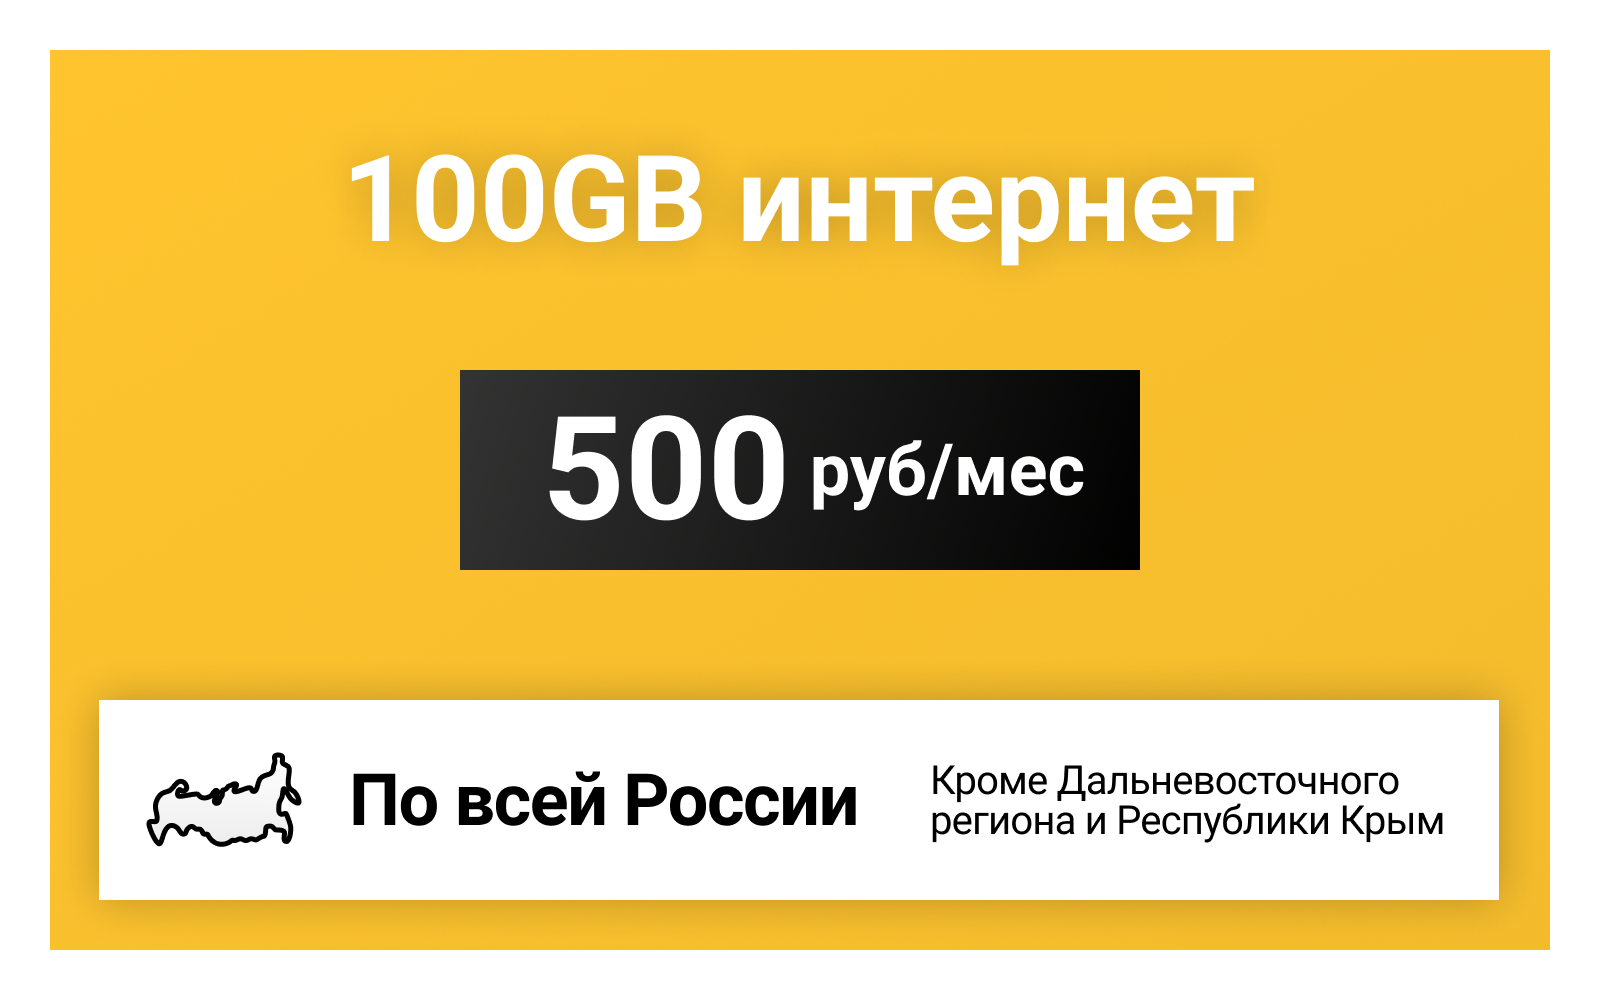 100GB интернет тариф для модема за 500 р/мес